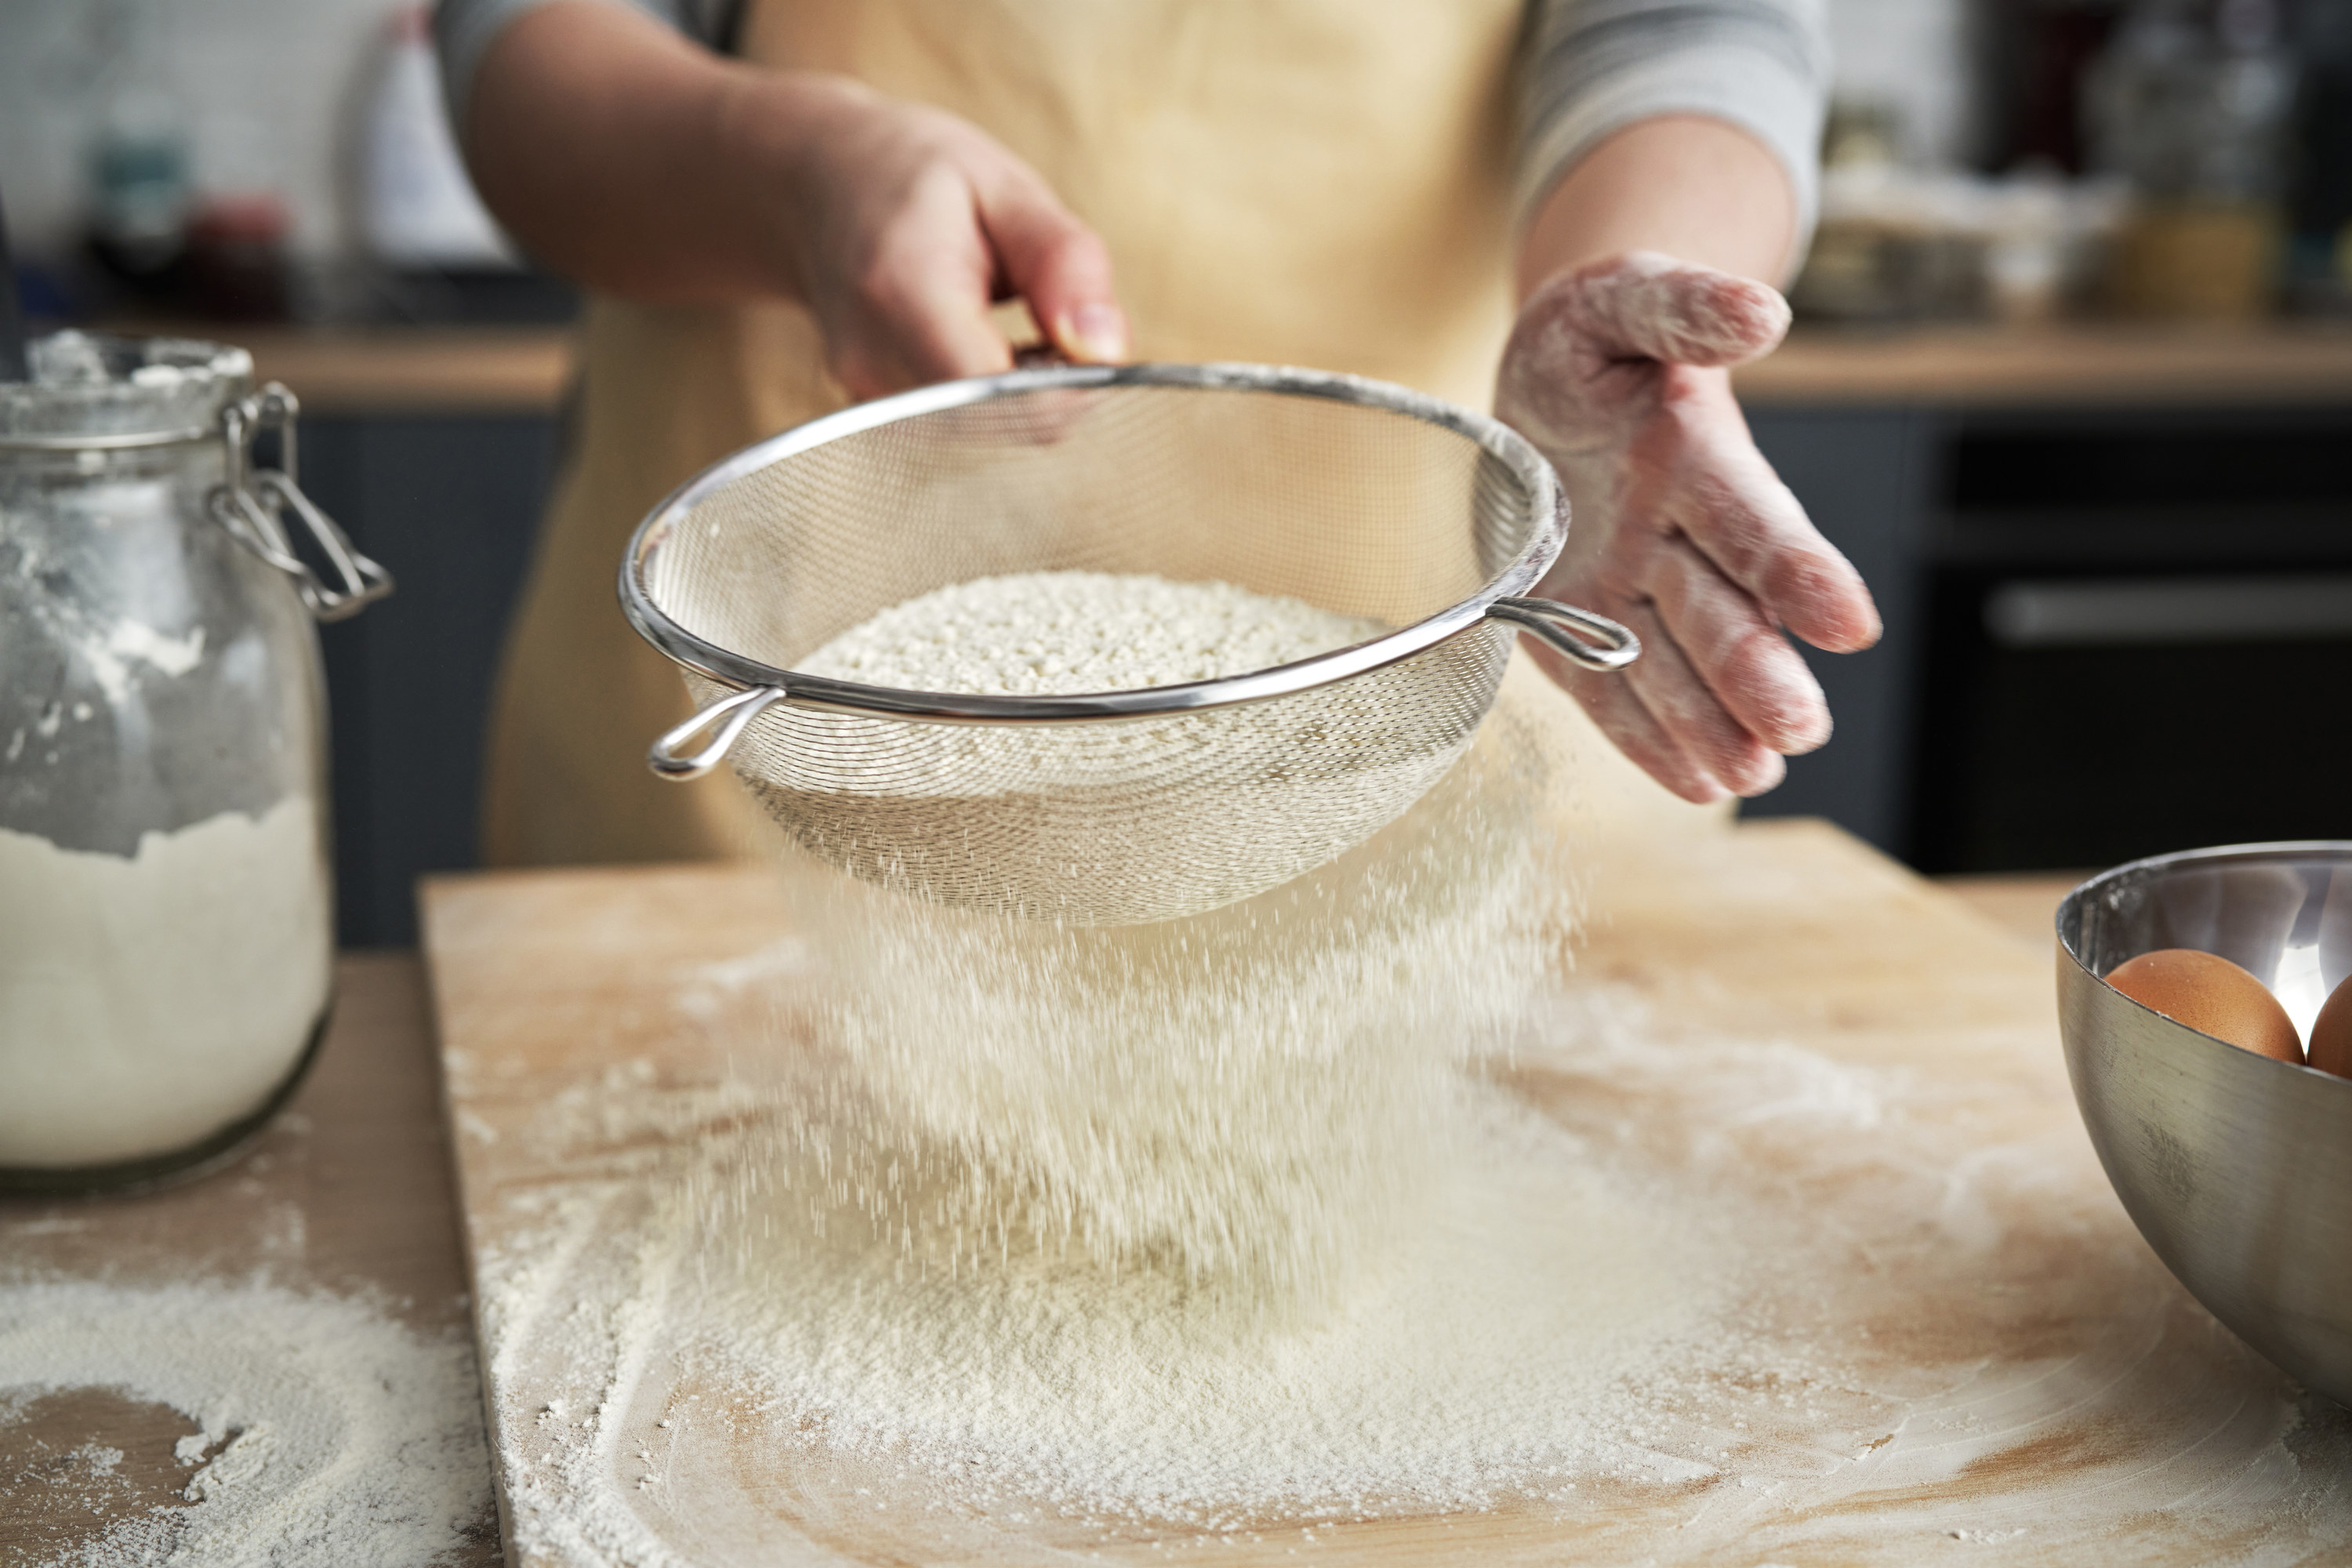 Sifting flour onto a cutting board